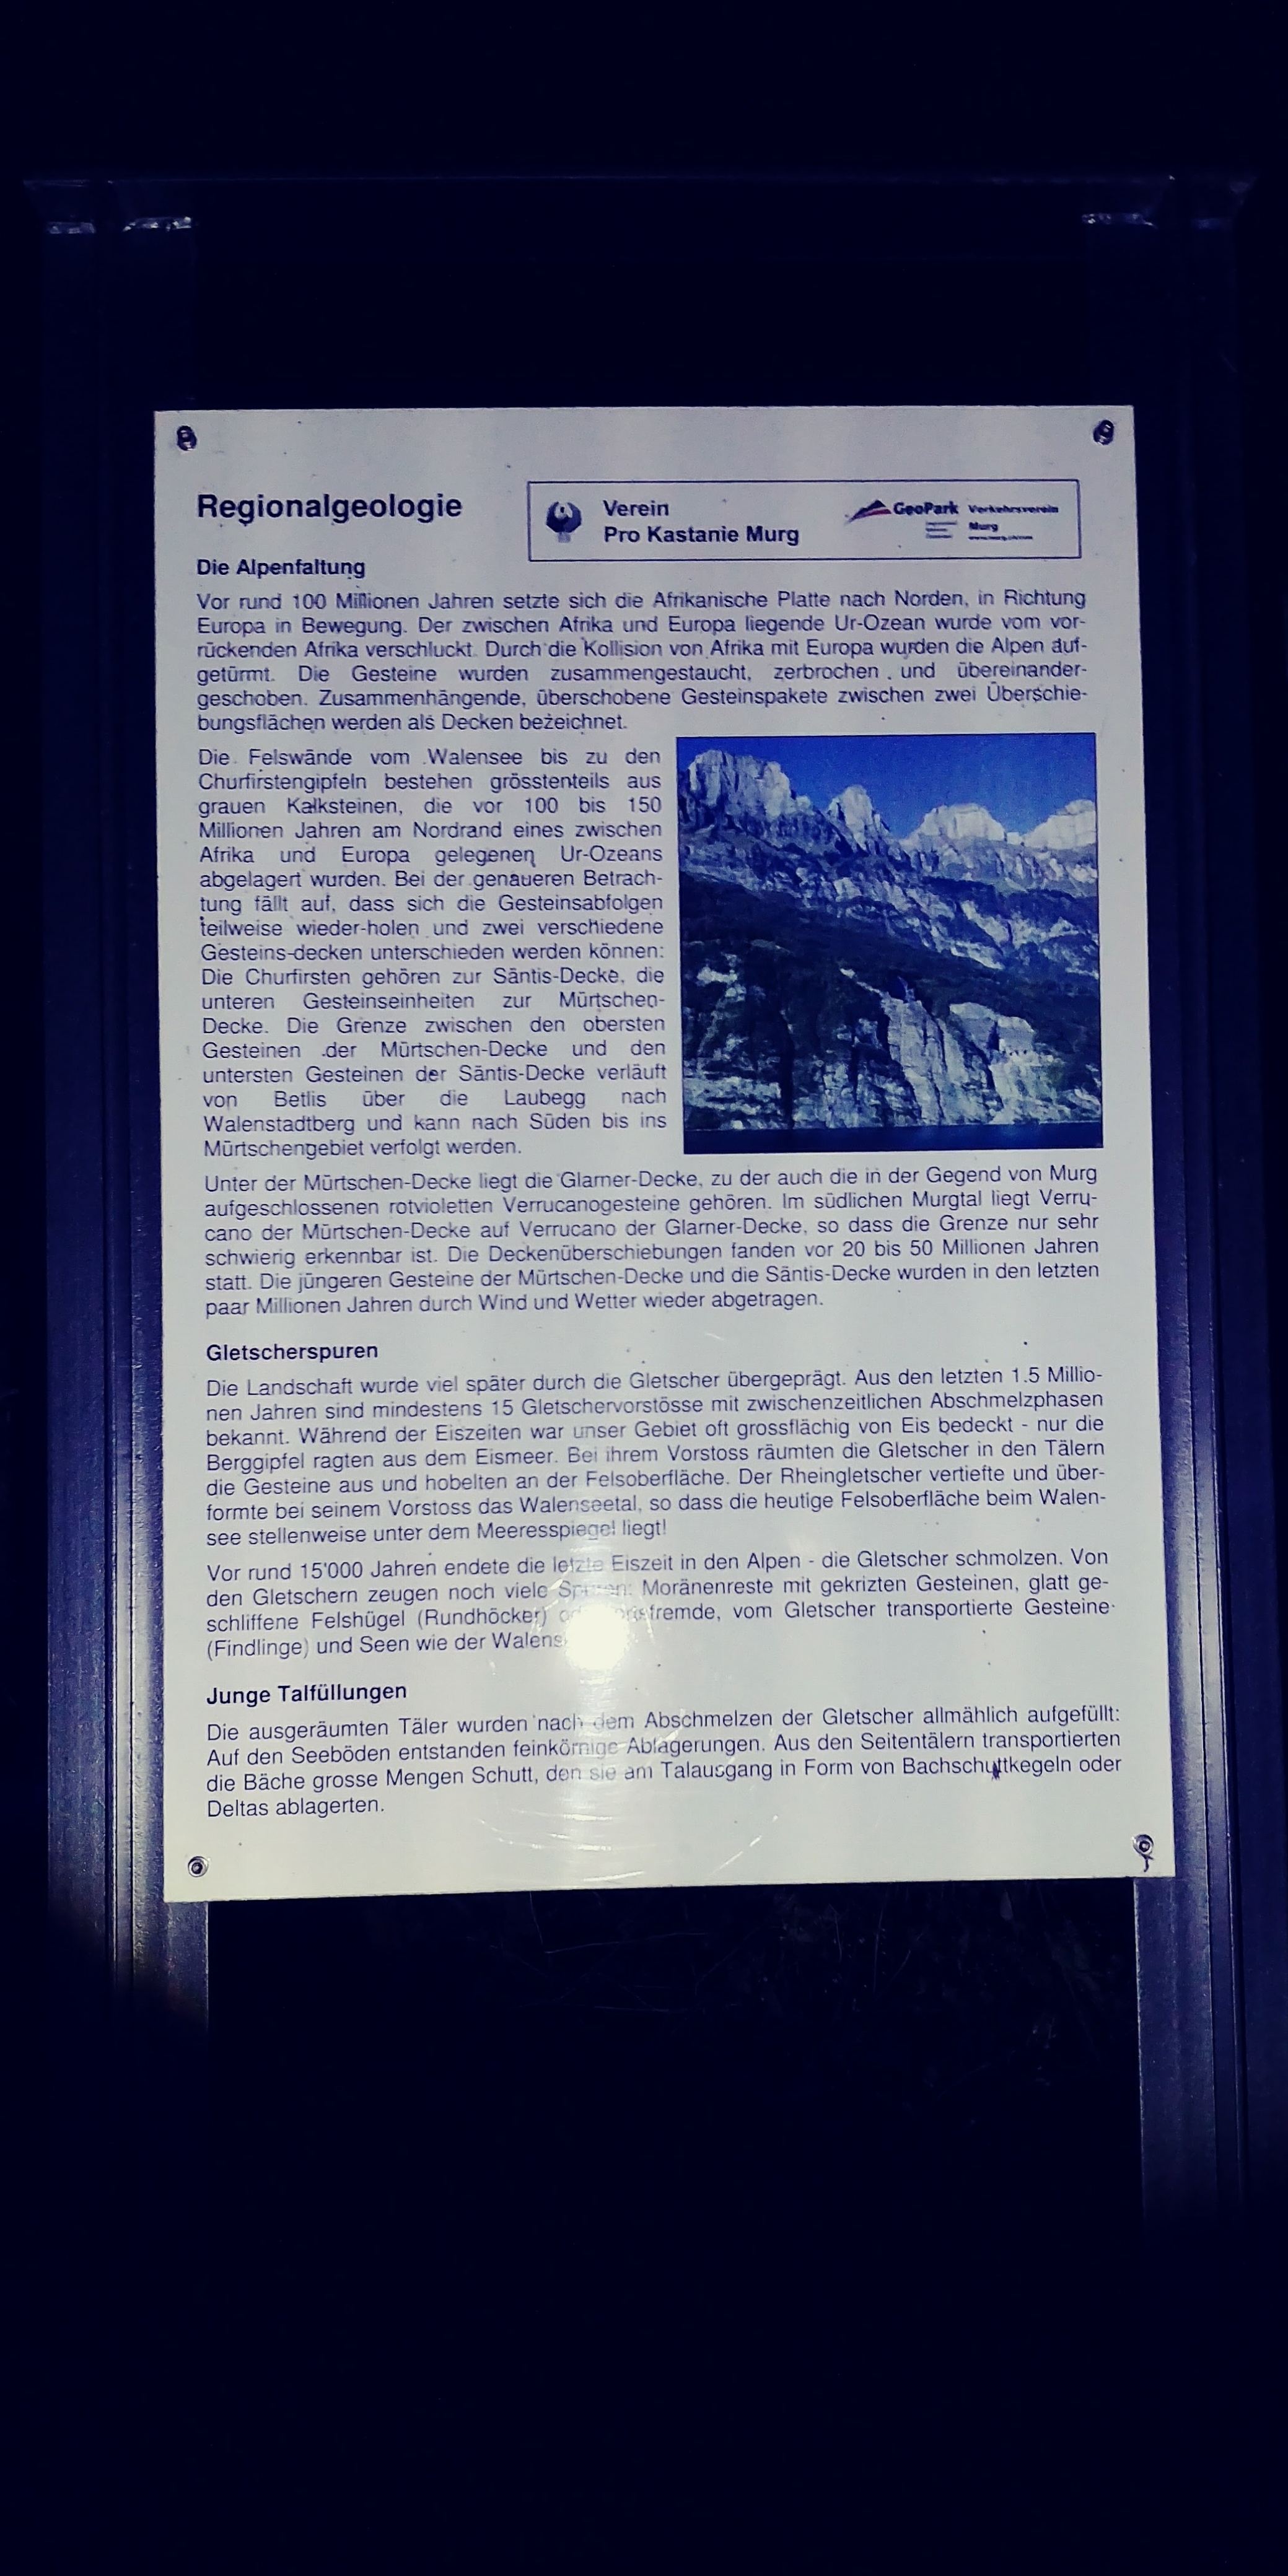 Geological alp history.